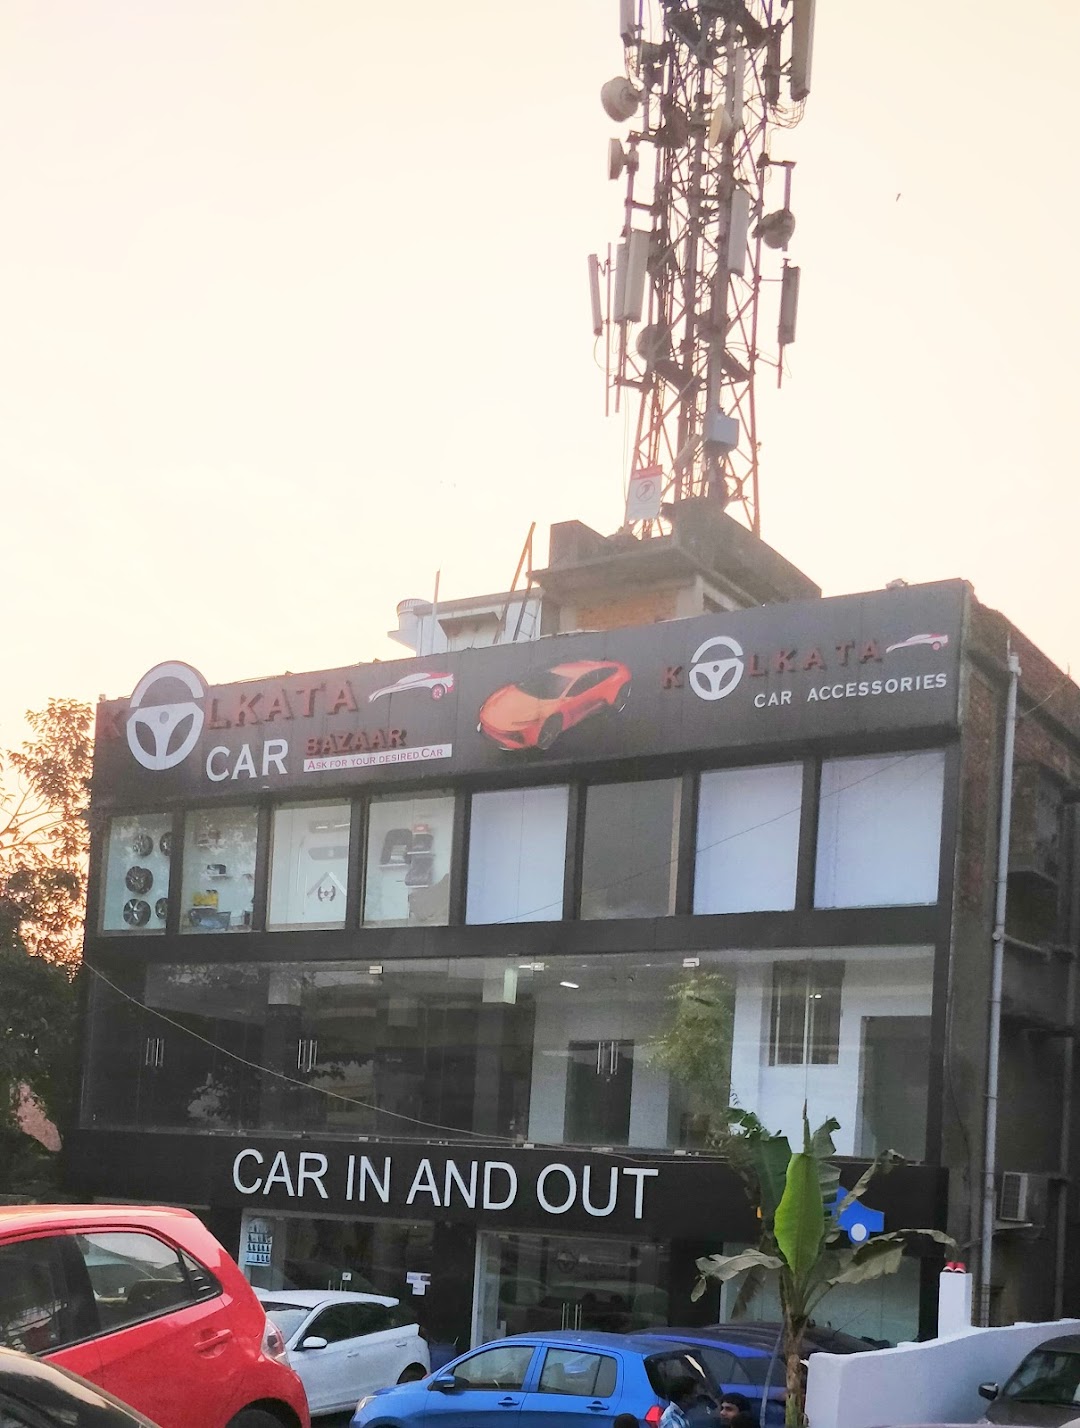 Kolkata Car Bazaar